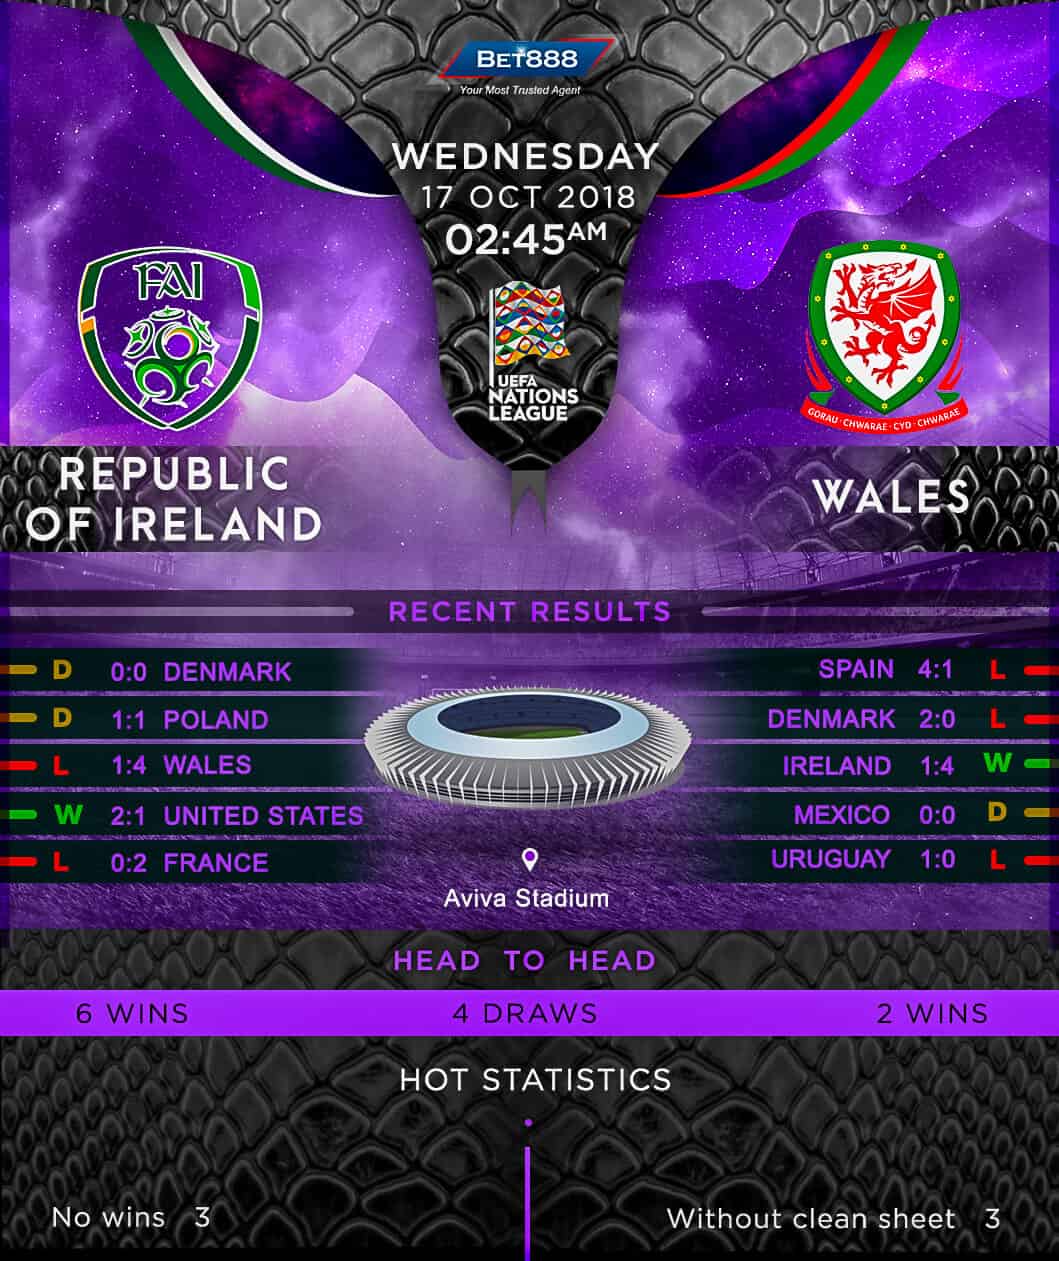 Republic of Ireland vs Wales 17/10/18